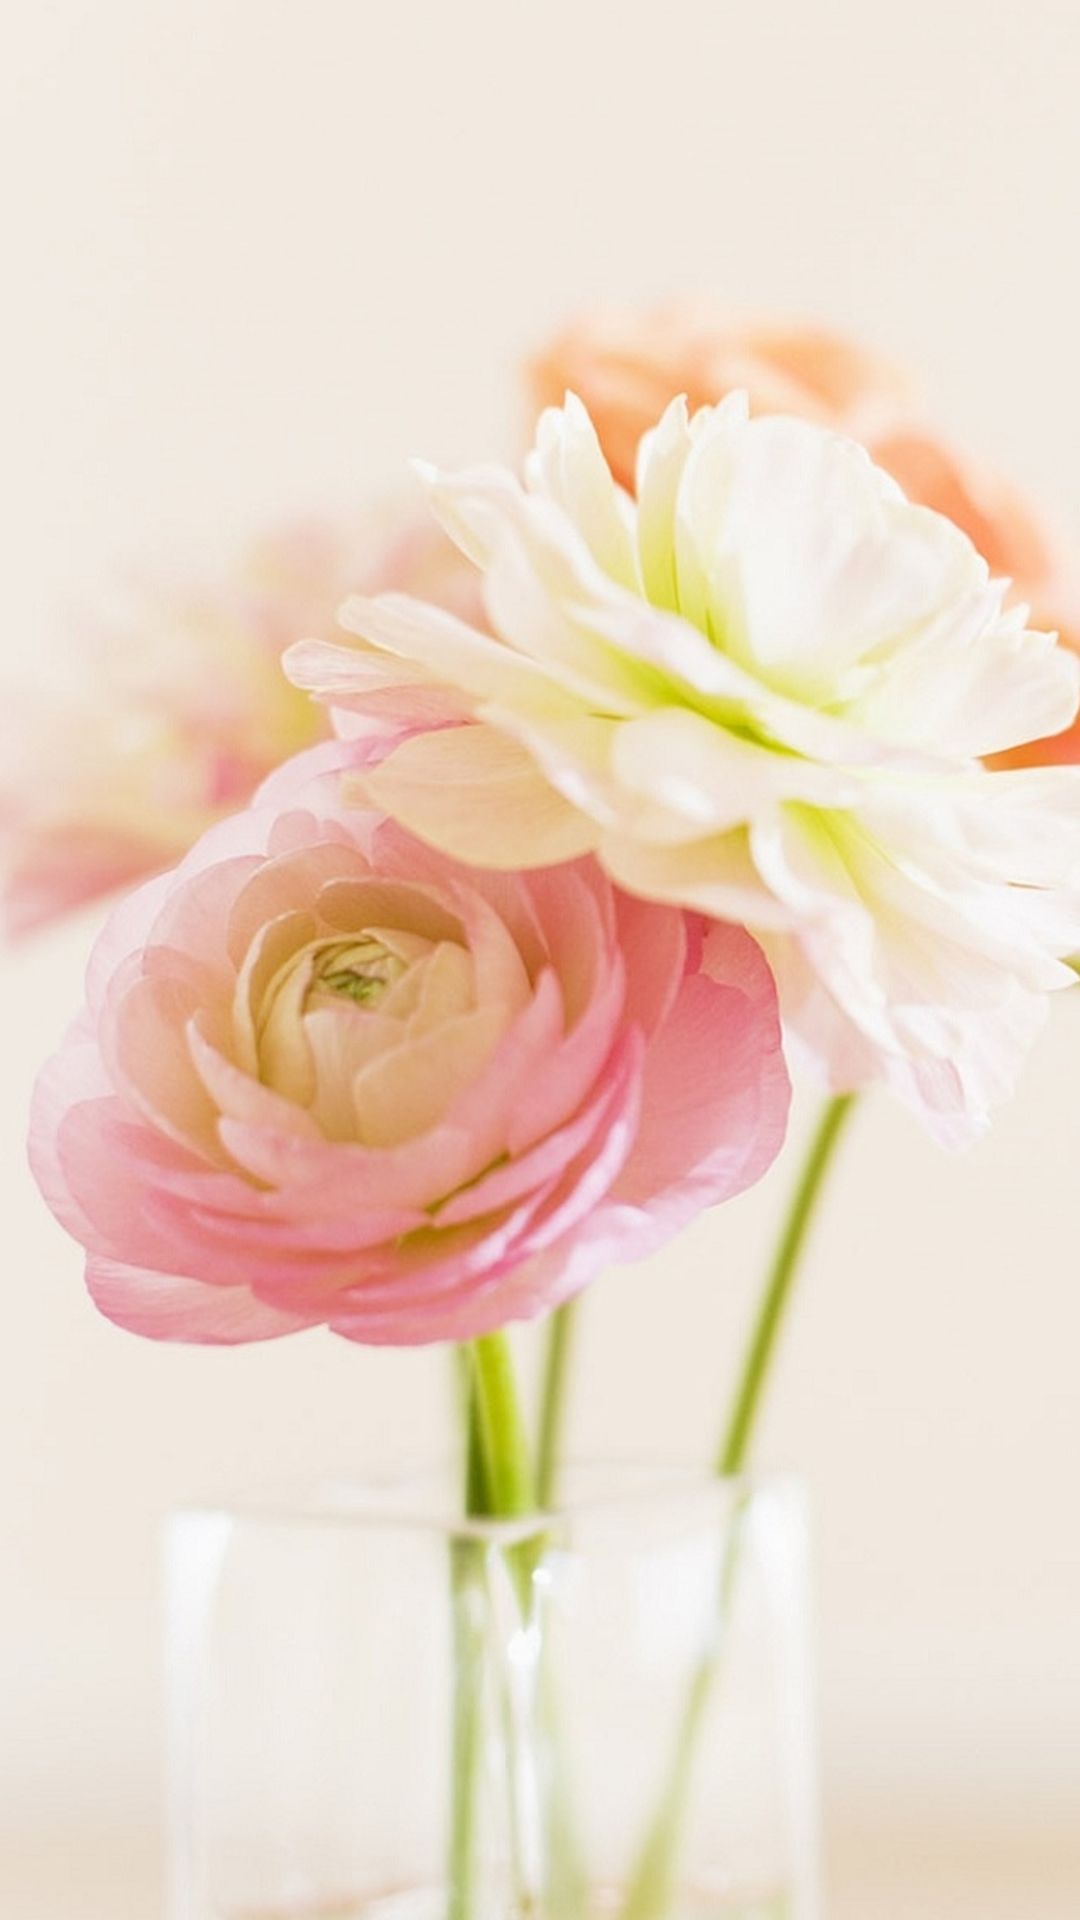 Elegant Beautiful Bloom Glass Vase IPhone 6 Wallpaper Download. IPhone Wallpaper, IPad Wallpaper One Stop Download. Home Flowers, Beautiful Blooms, Flowers